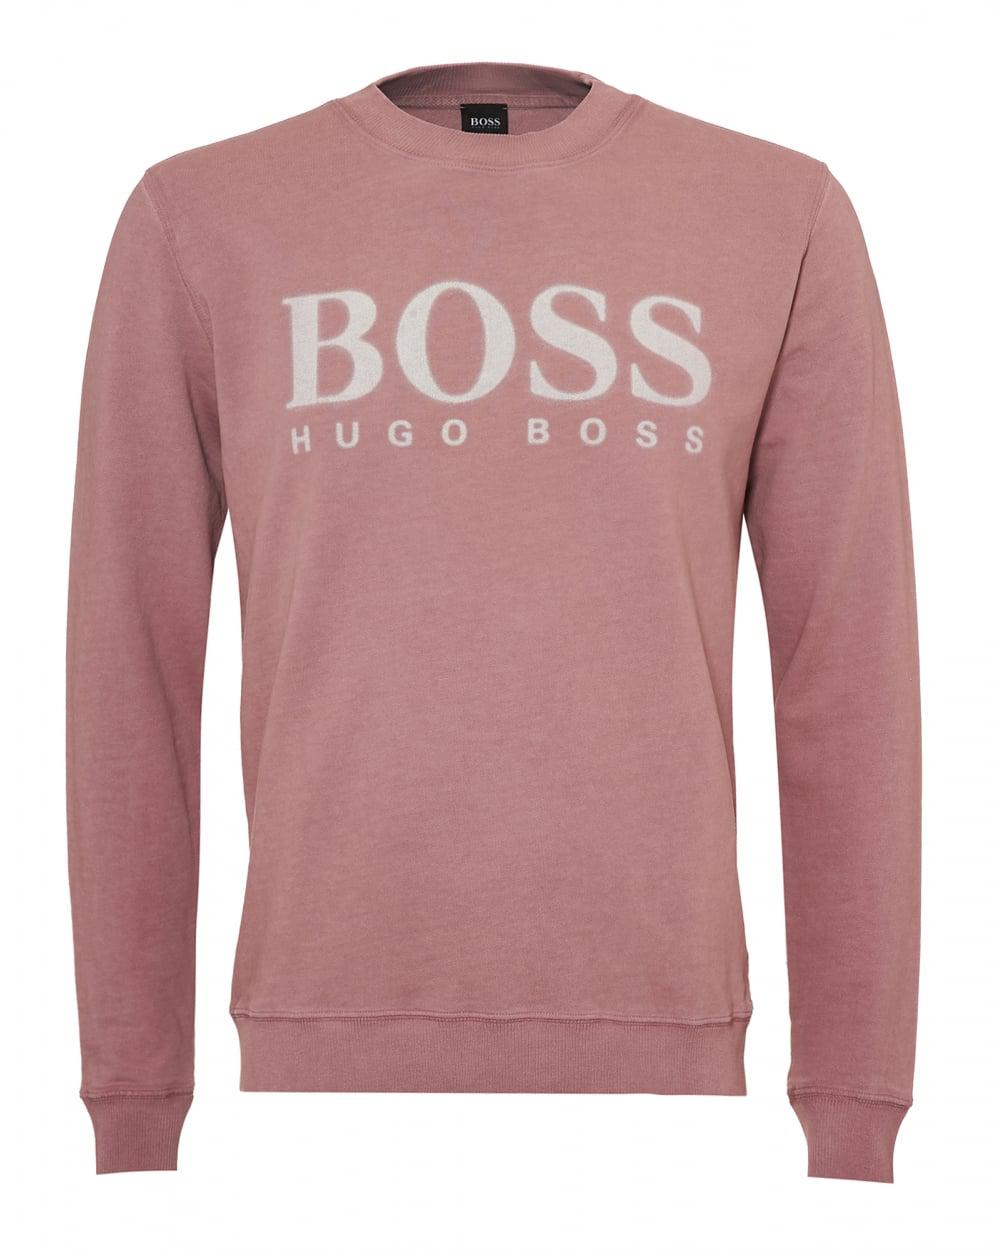 pink hugo boss jumper OFF 59% - Online 